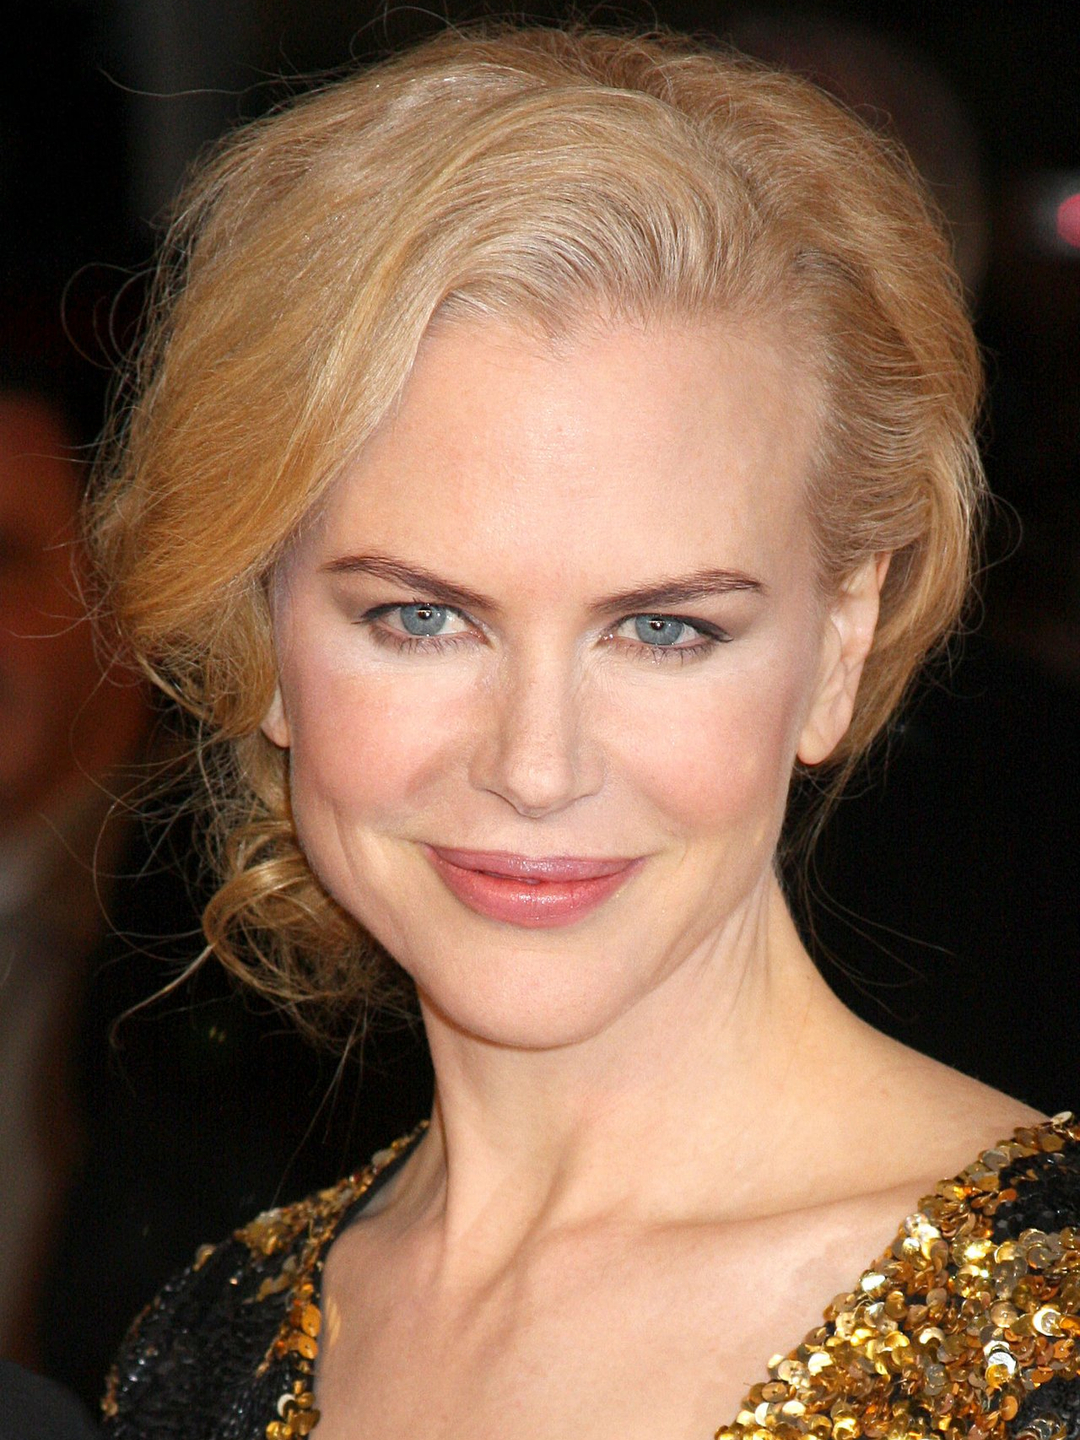 Nicole Kidman life path